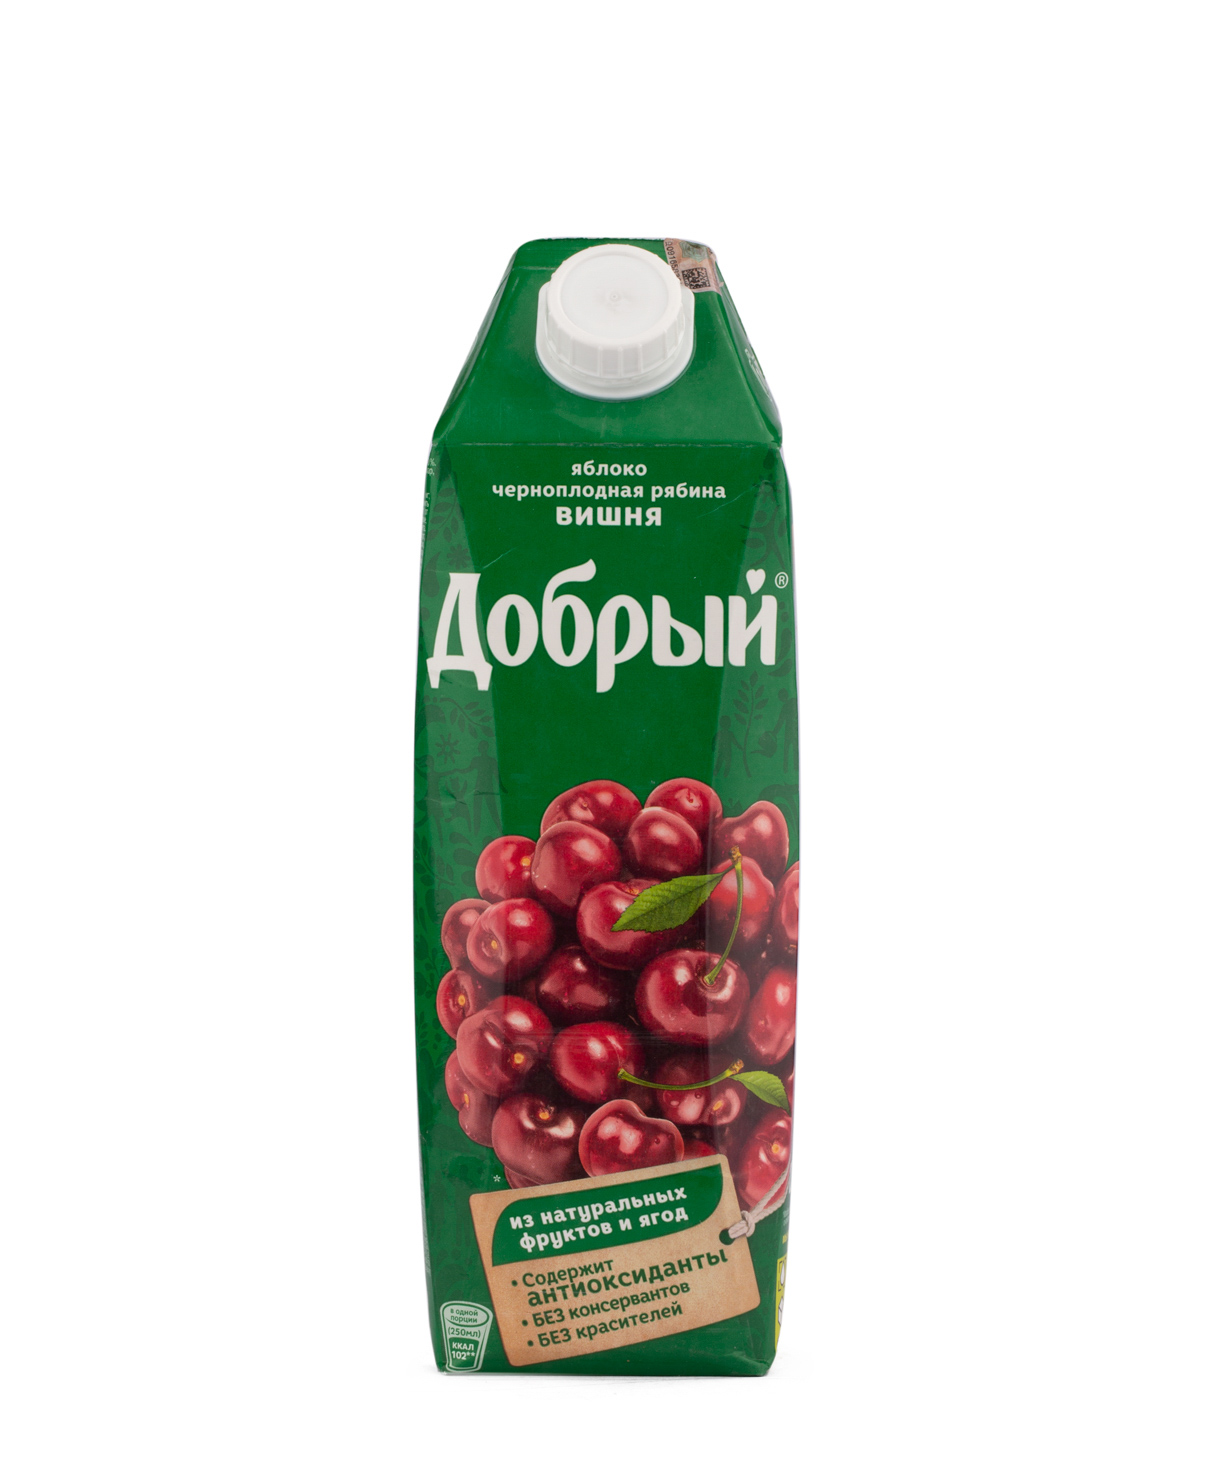 Natural juice `Good` apples, cherries, currants 1 liter